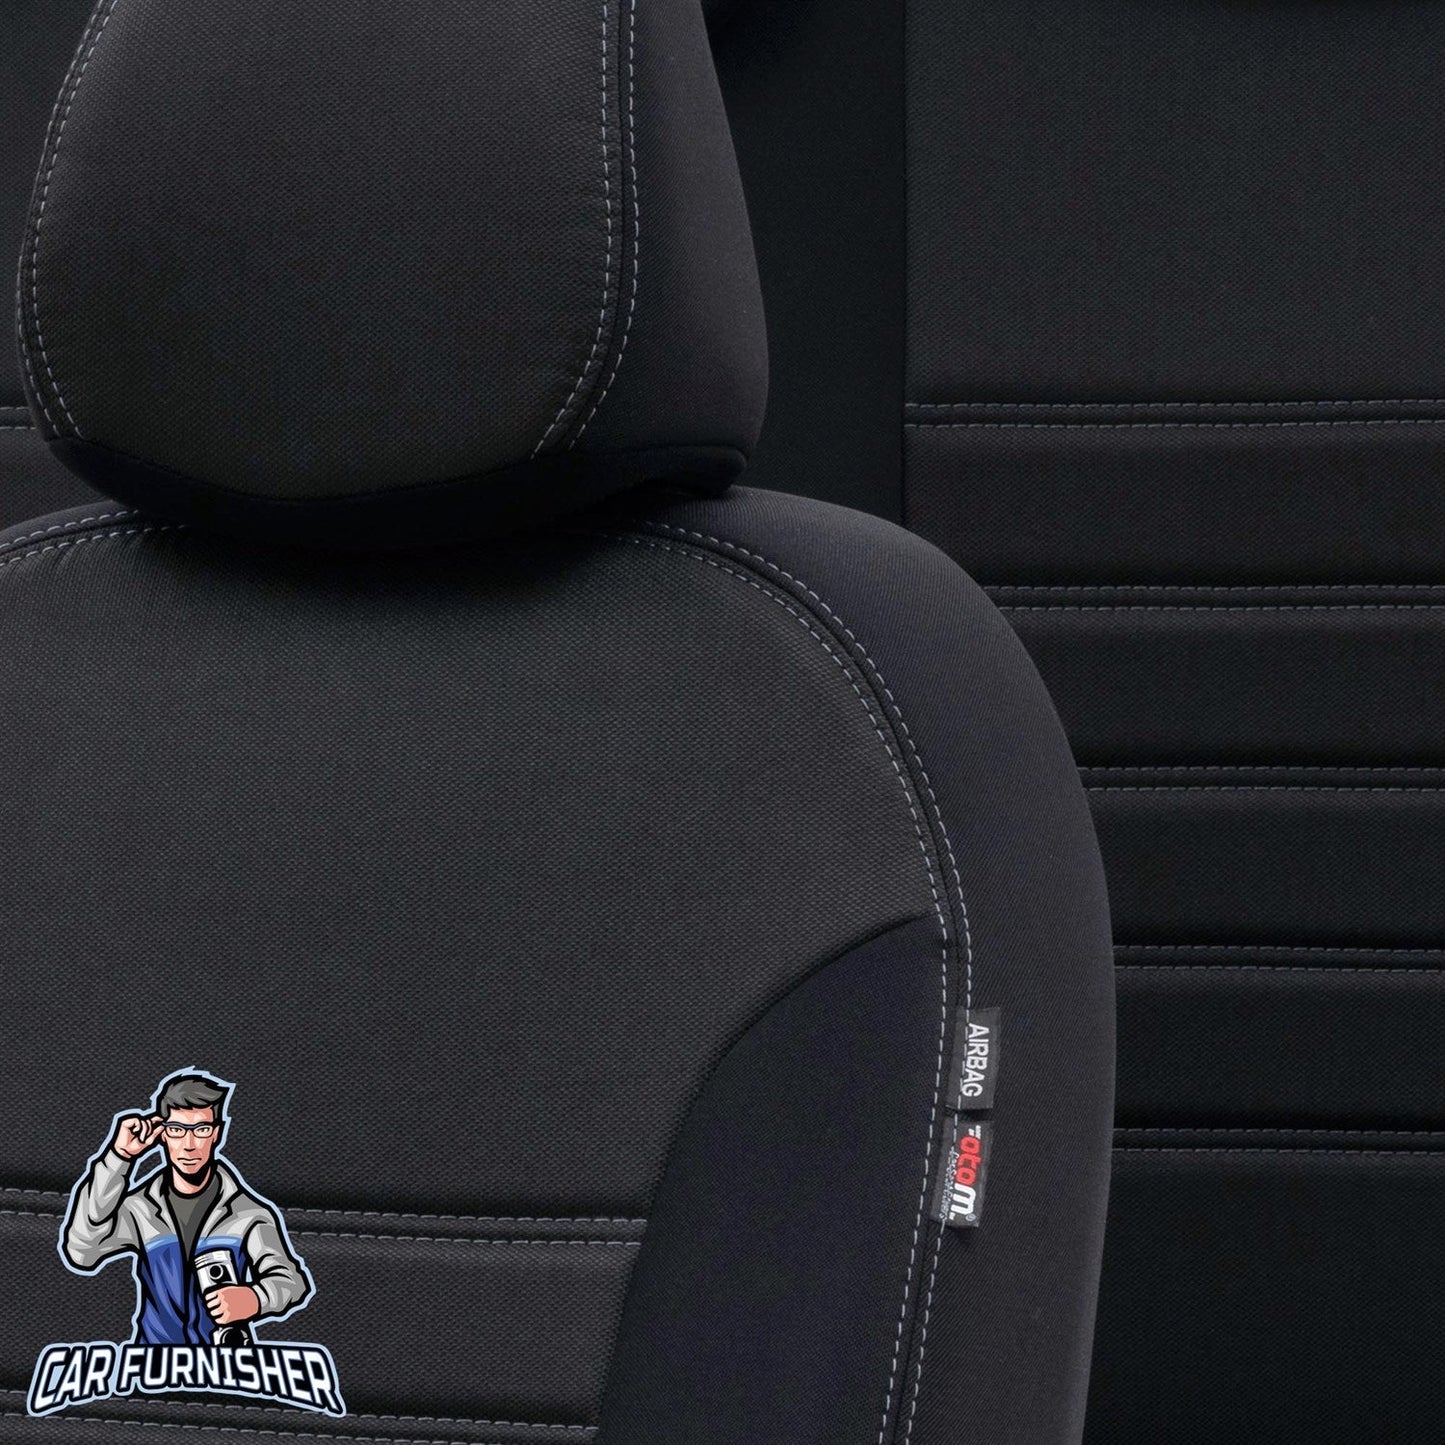 Volkswagen Scirocco Seat Cover Original Jacquard Design Black Jacquard Fabric